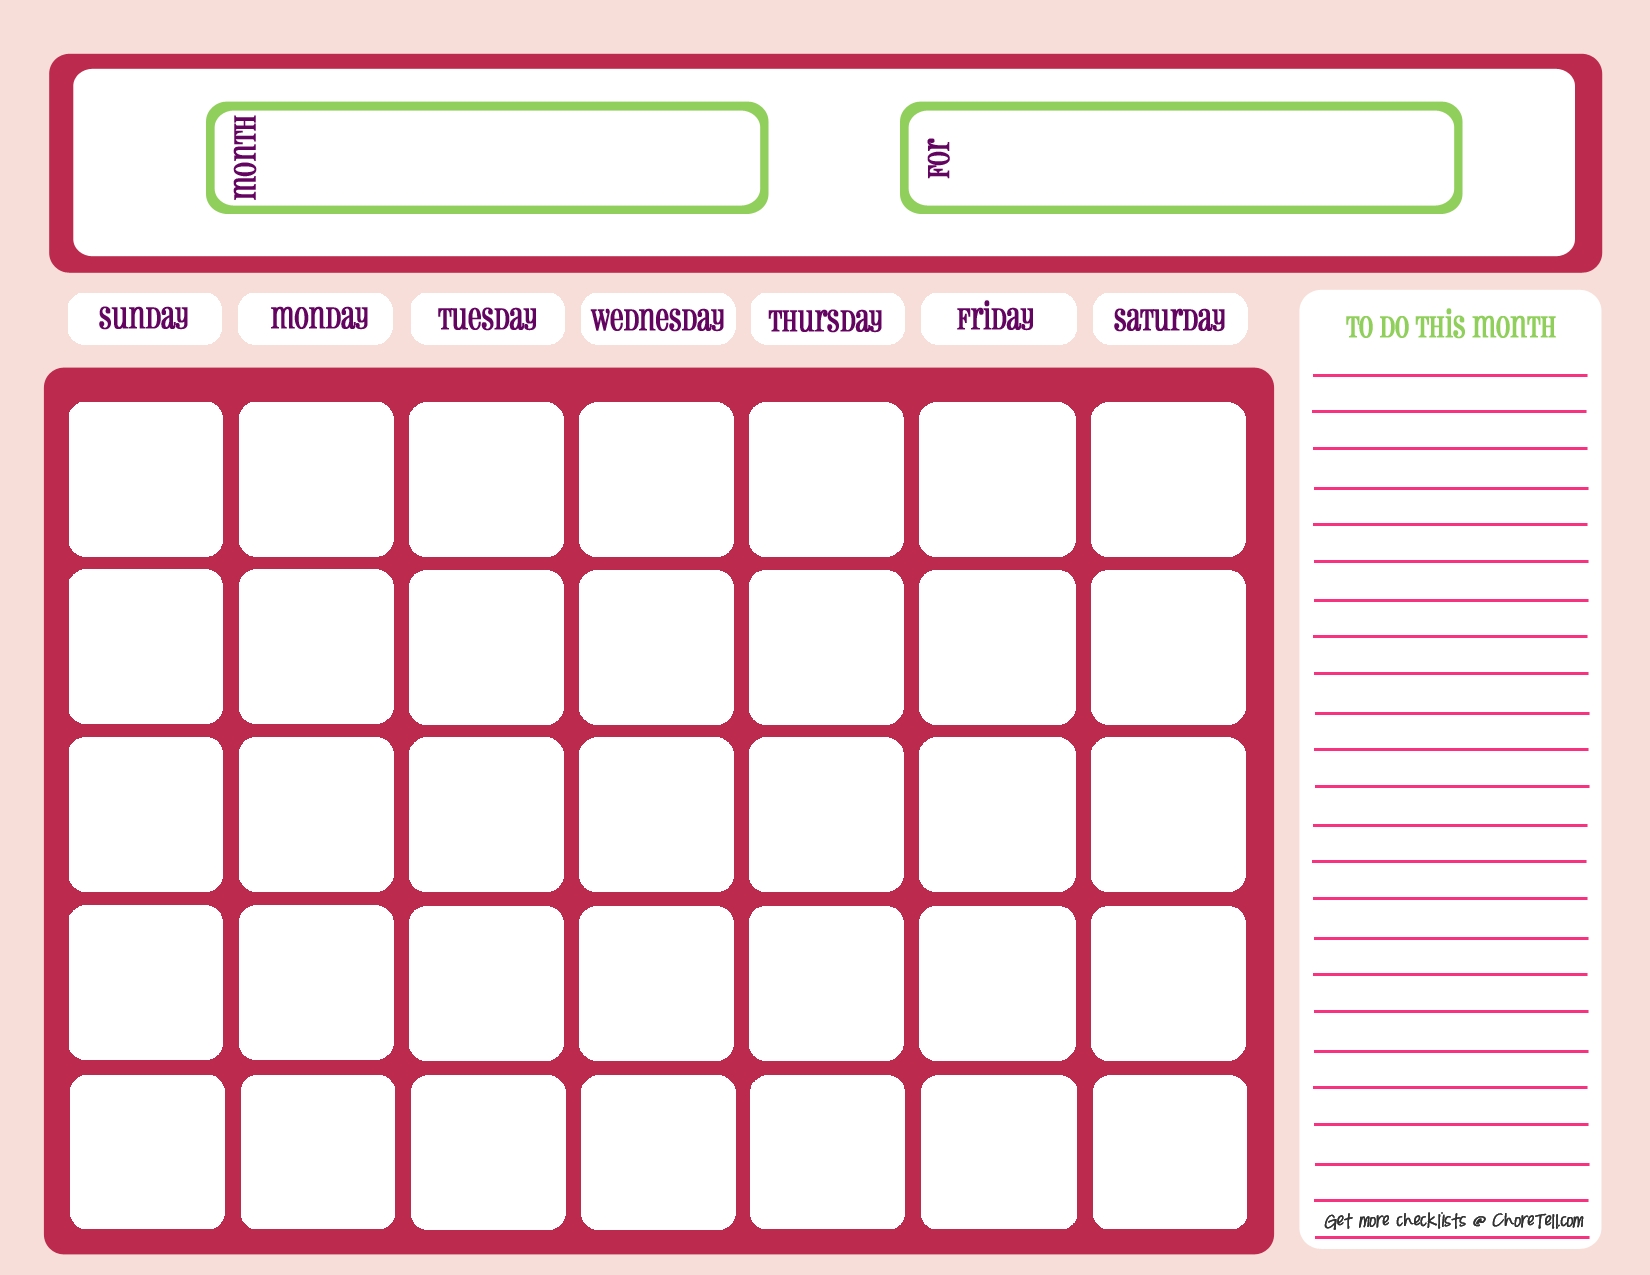 Monthly Calendar Checklist | Monthly Calendar Blank 2020